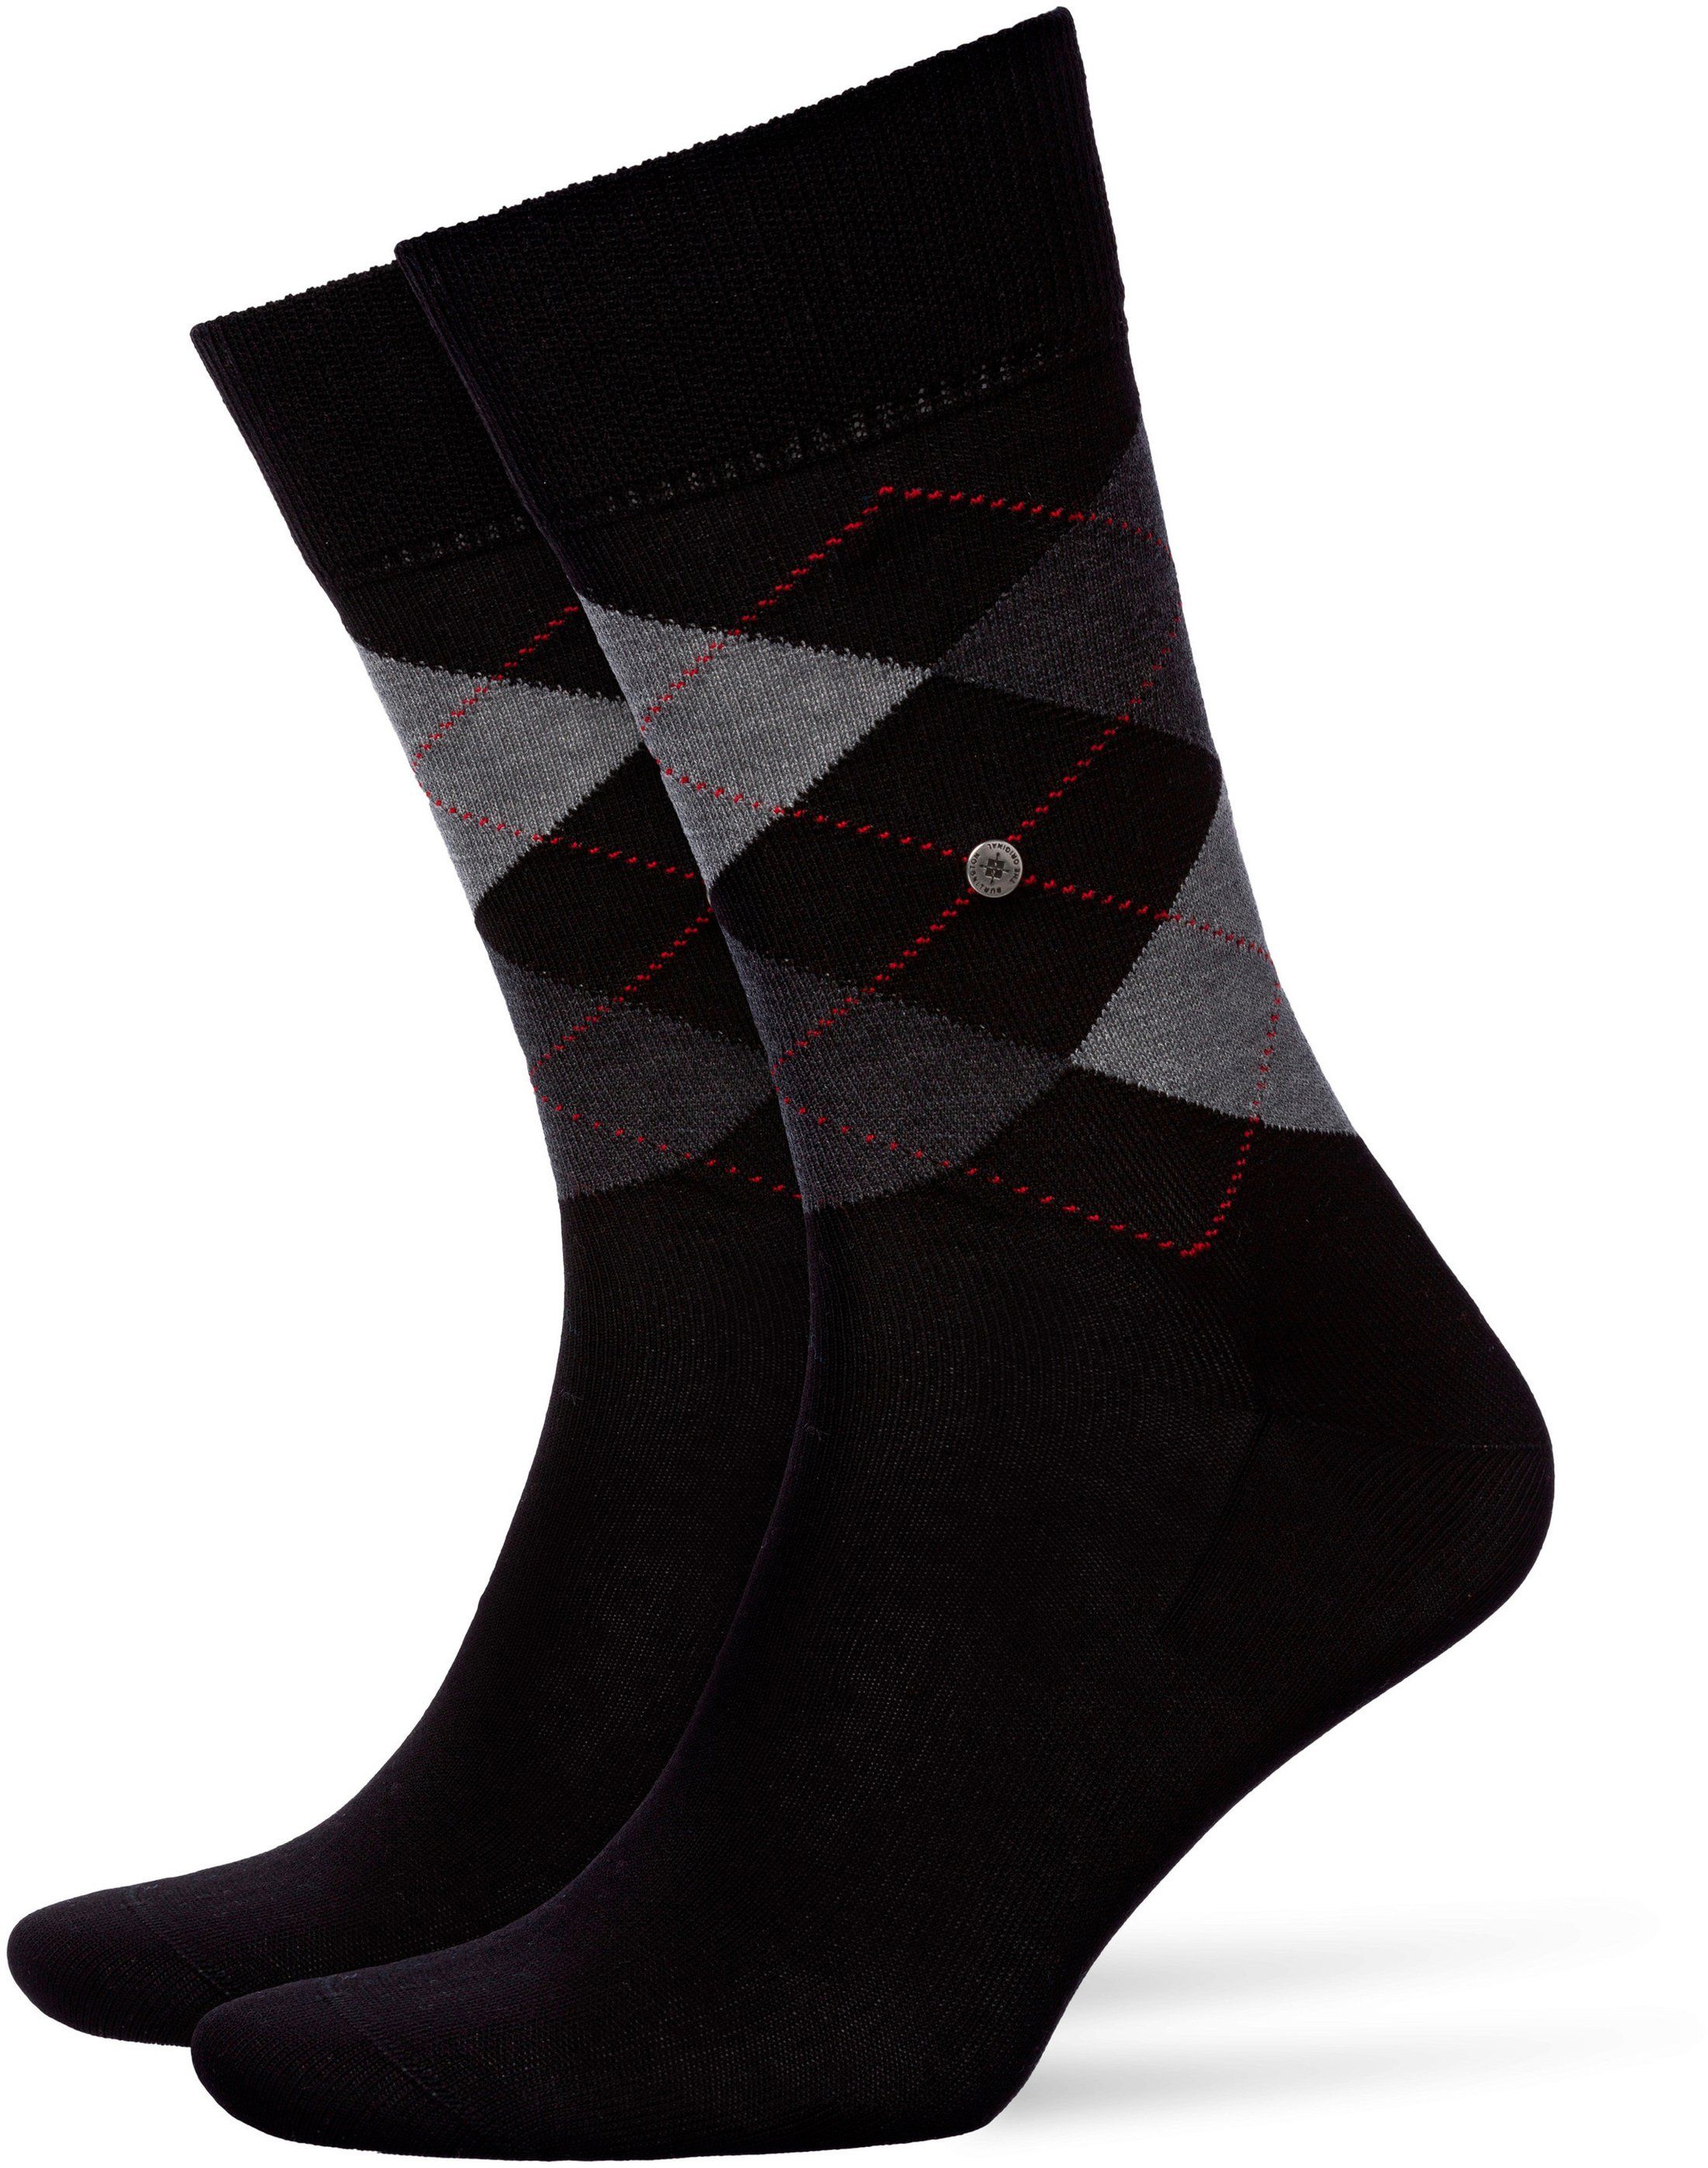 Burlington Socks Checkered Cotton 3000 Black size 40-46